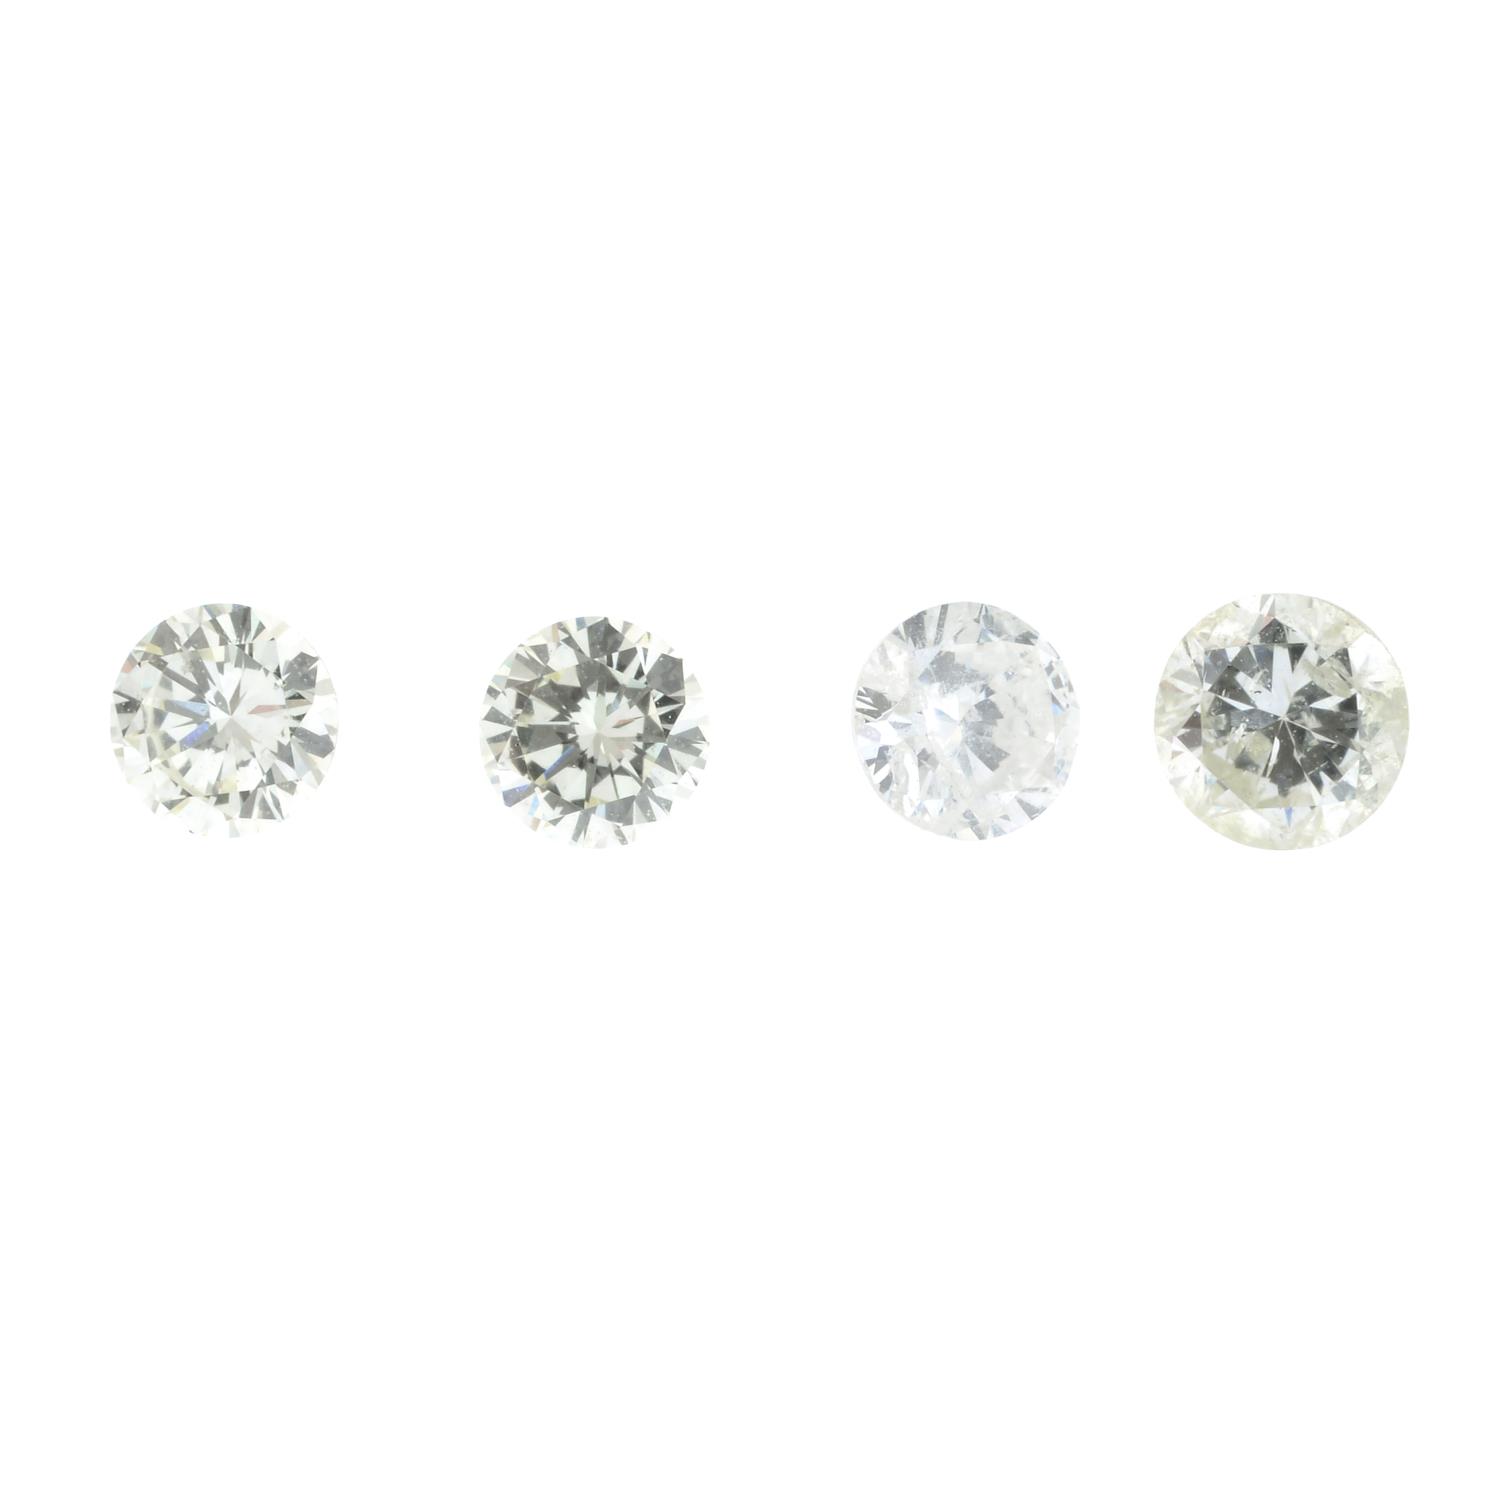 Five brilliant-cut diamonds, total weight 0.99ct.